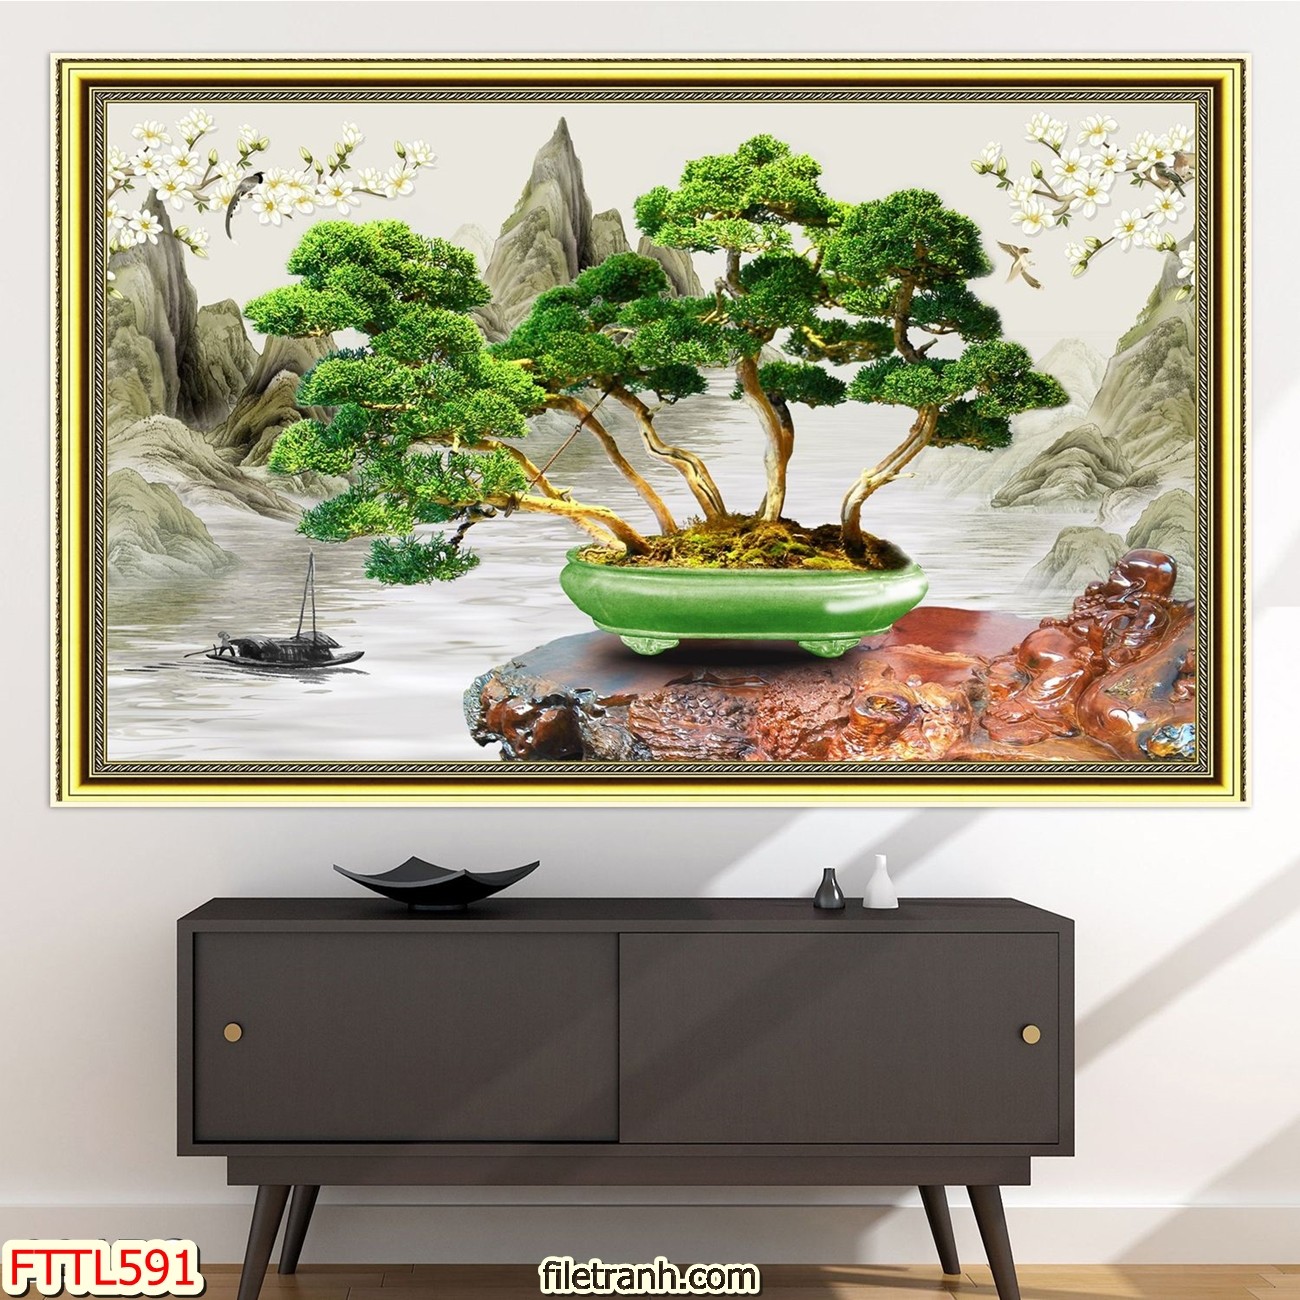 https://filetranh.com/file-tranh-chau-mai-bonsai/file-tranh-chau-mai-bonsai-fttl591.html